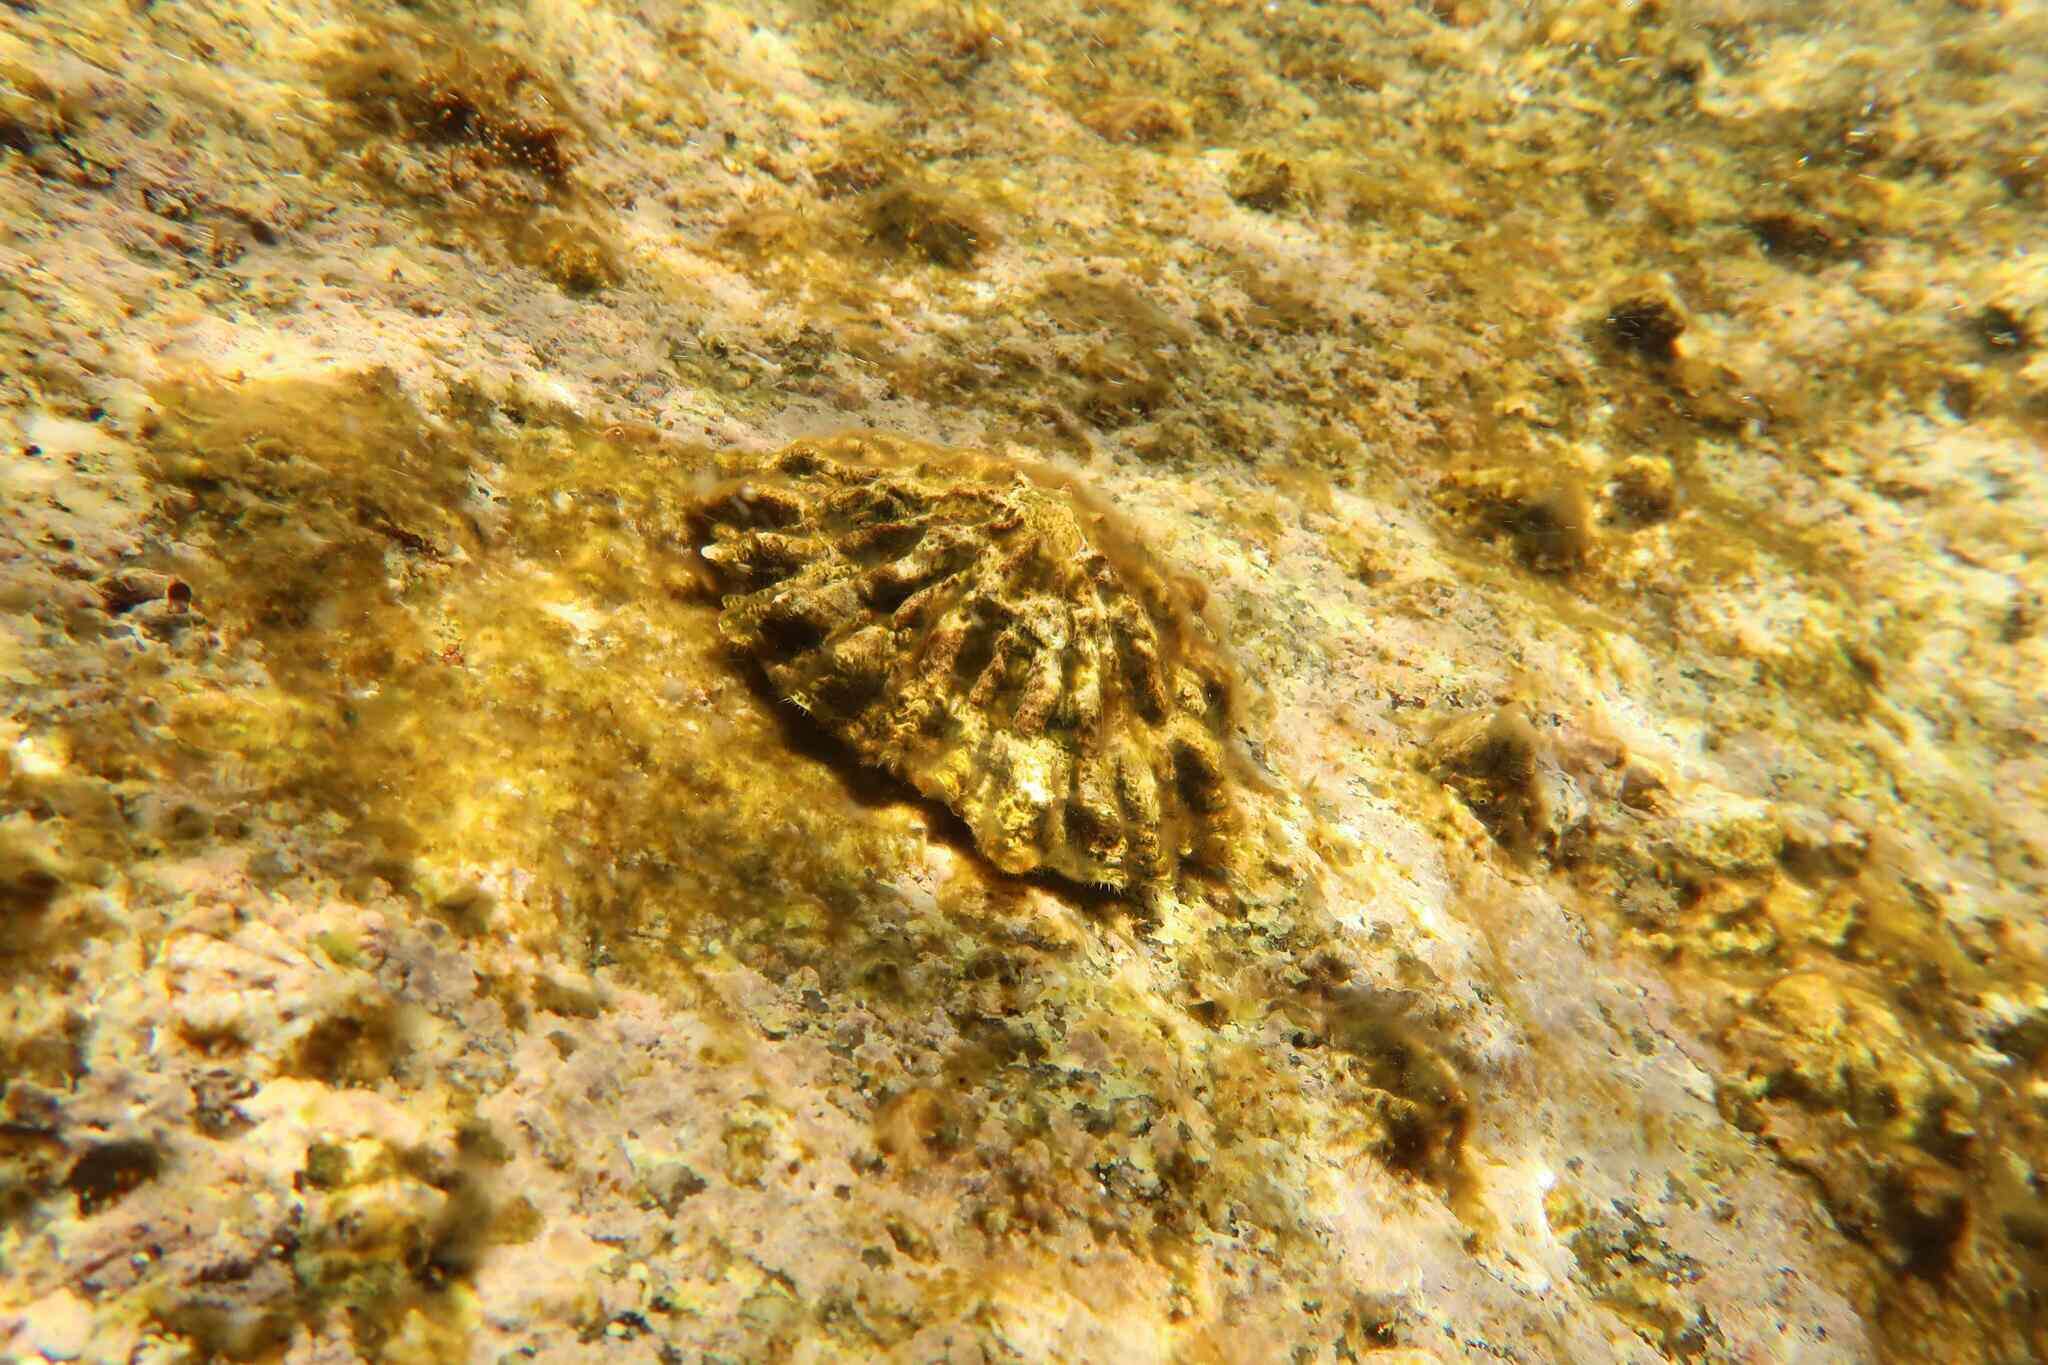 Image of ribbed Mediterranean limpet